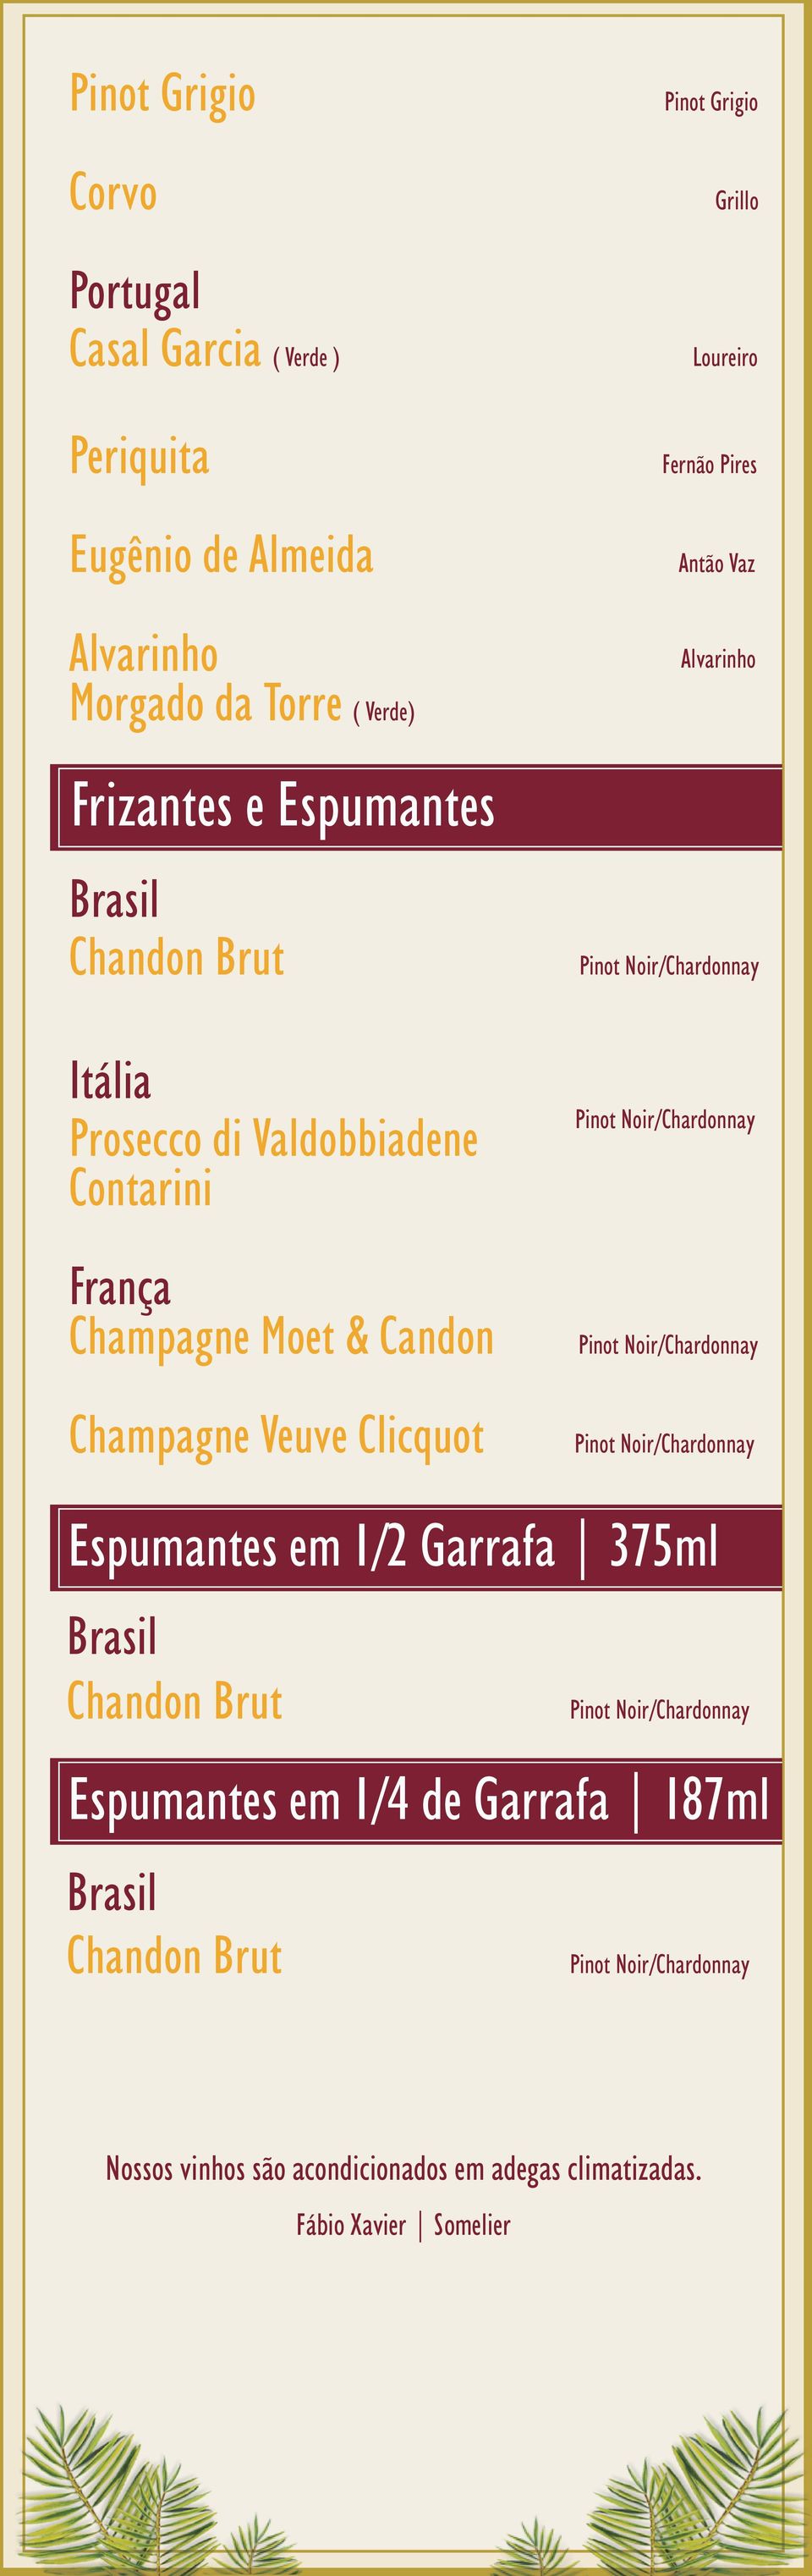 Contarini França Champagne Moet & Candon Champagne Veuve Clicquot Espumantes em 1/2 Garrafa 375ml Brasil Chandon Brut